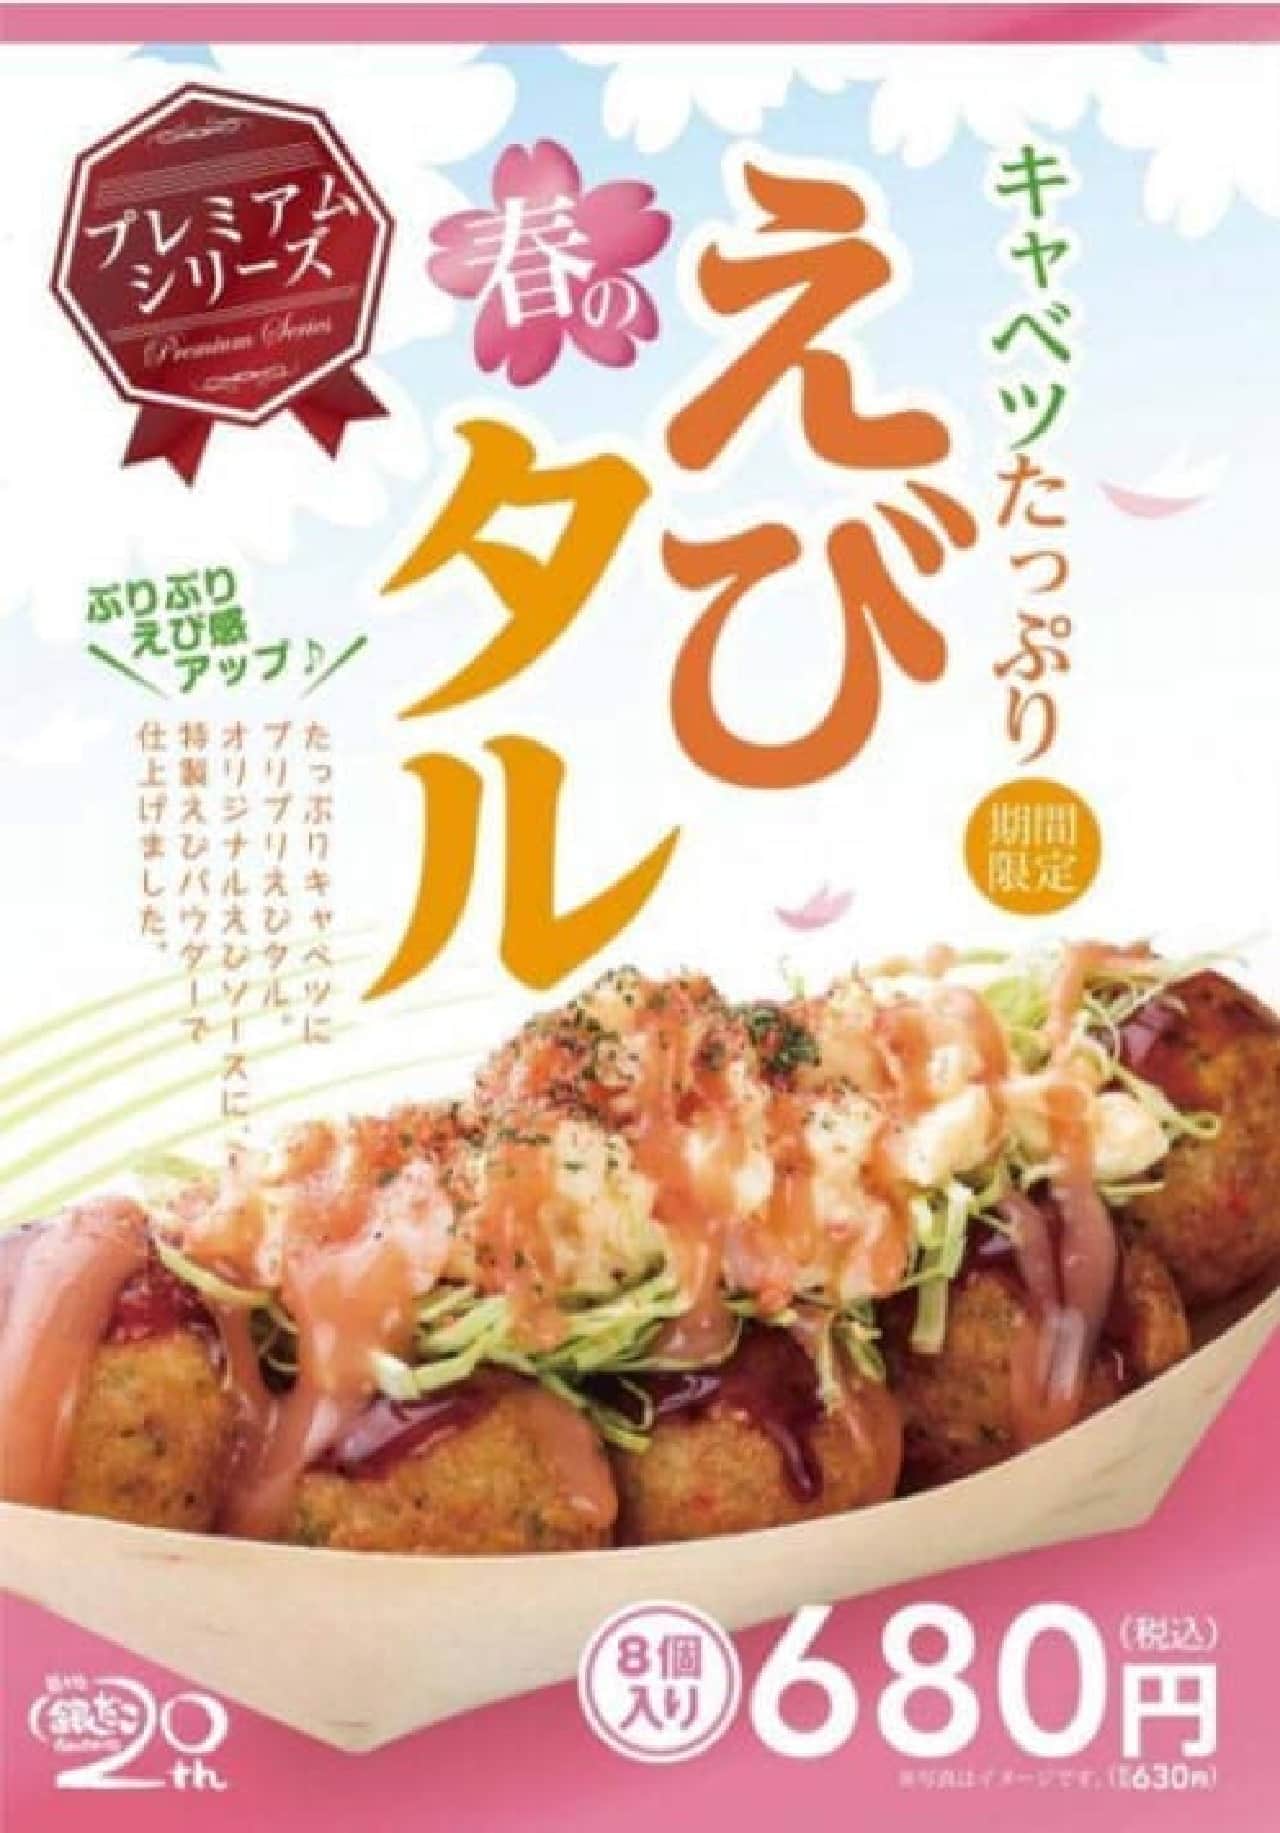 Tsukiji Gindaco "Spring shrimp tar with plenty of cabbage"